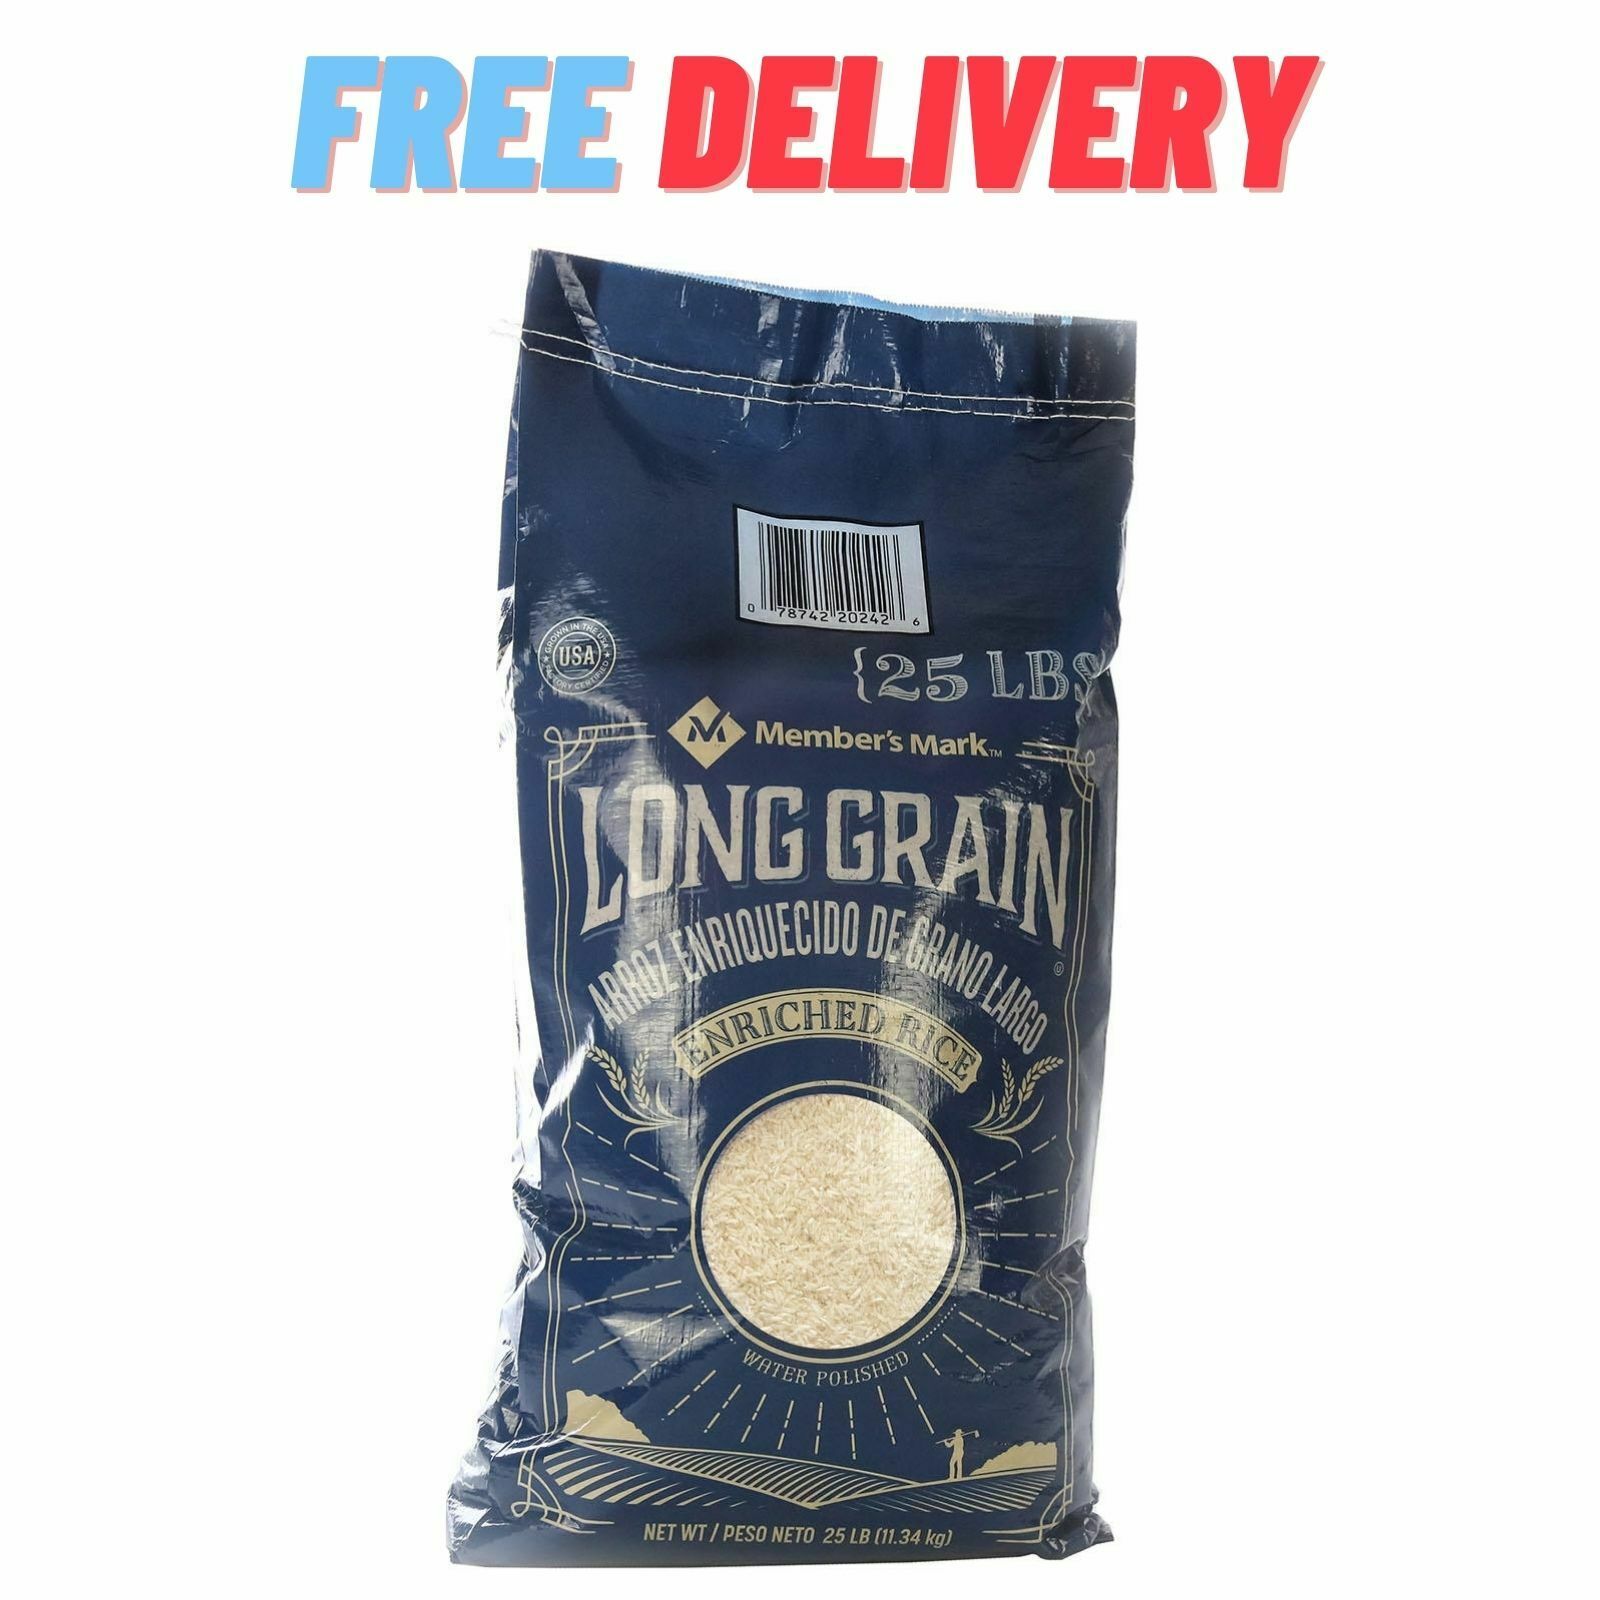 Member's Mark Long Grain White Rice (25 lb.) - FREE SHIPPING